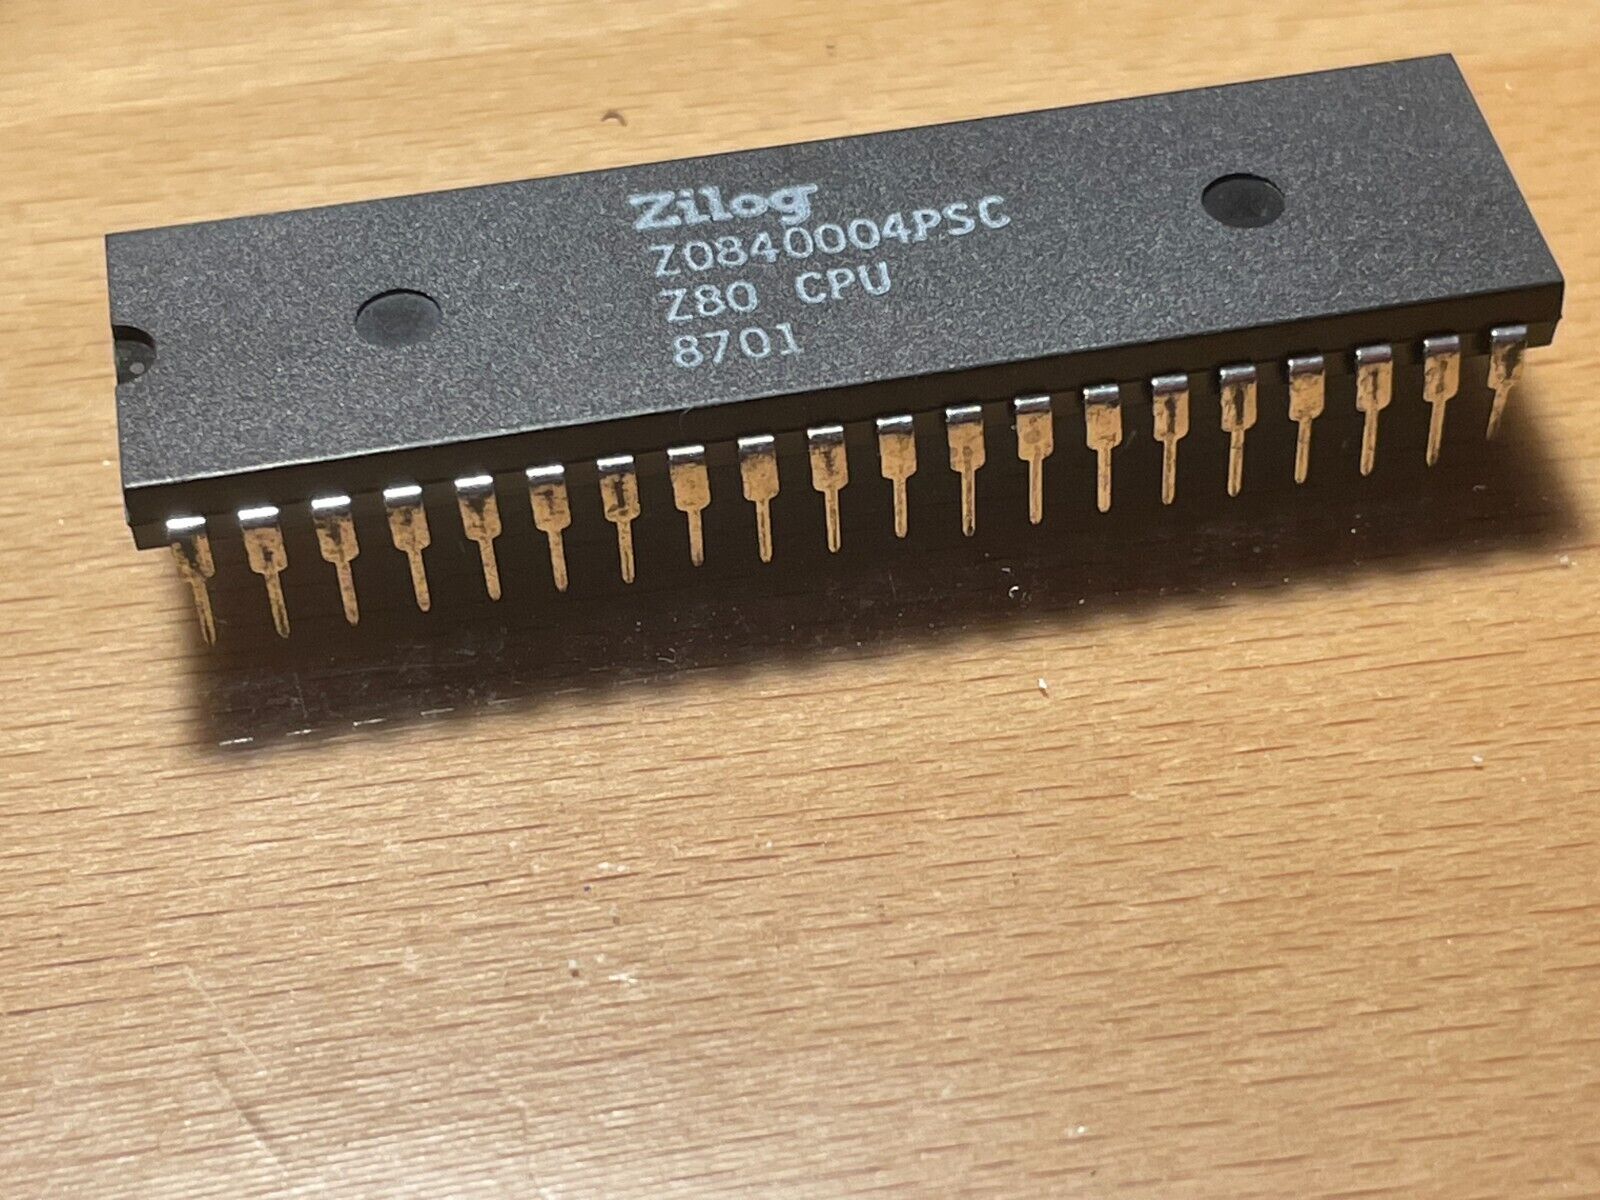 Zilog Z0840004PSC Z80 CPU 8-Bit Microprocessor DIP40